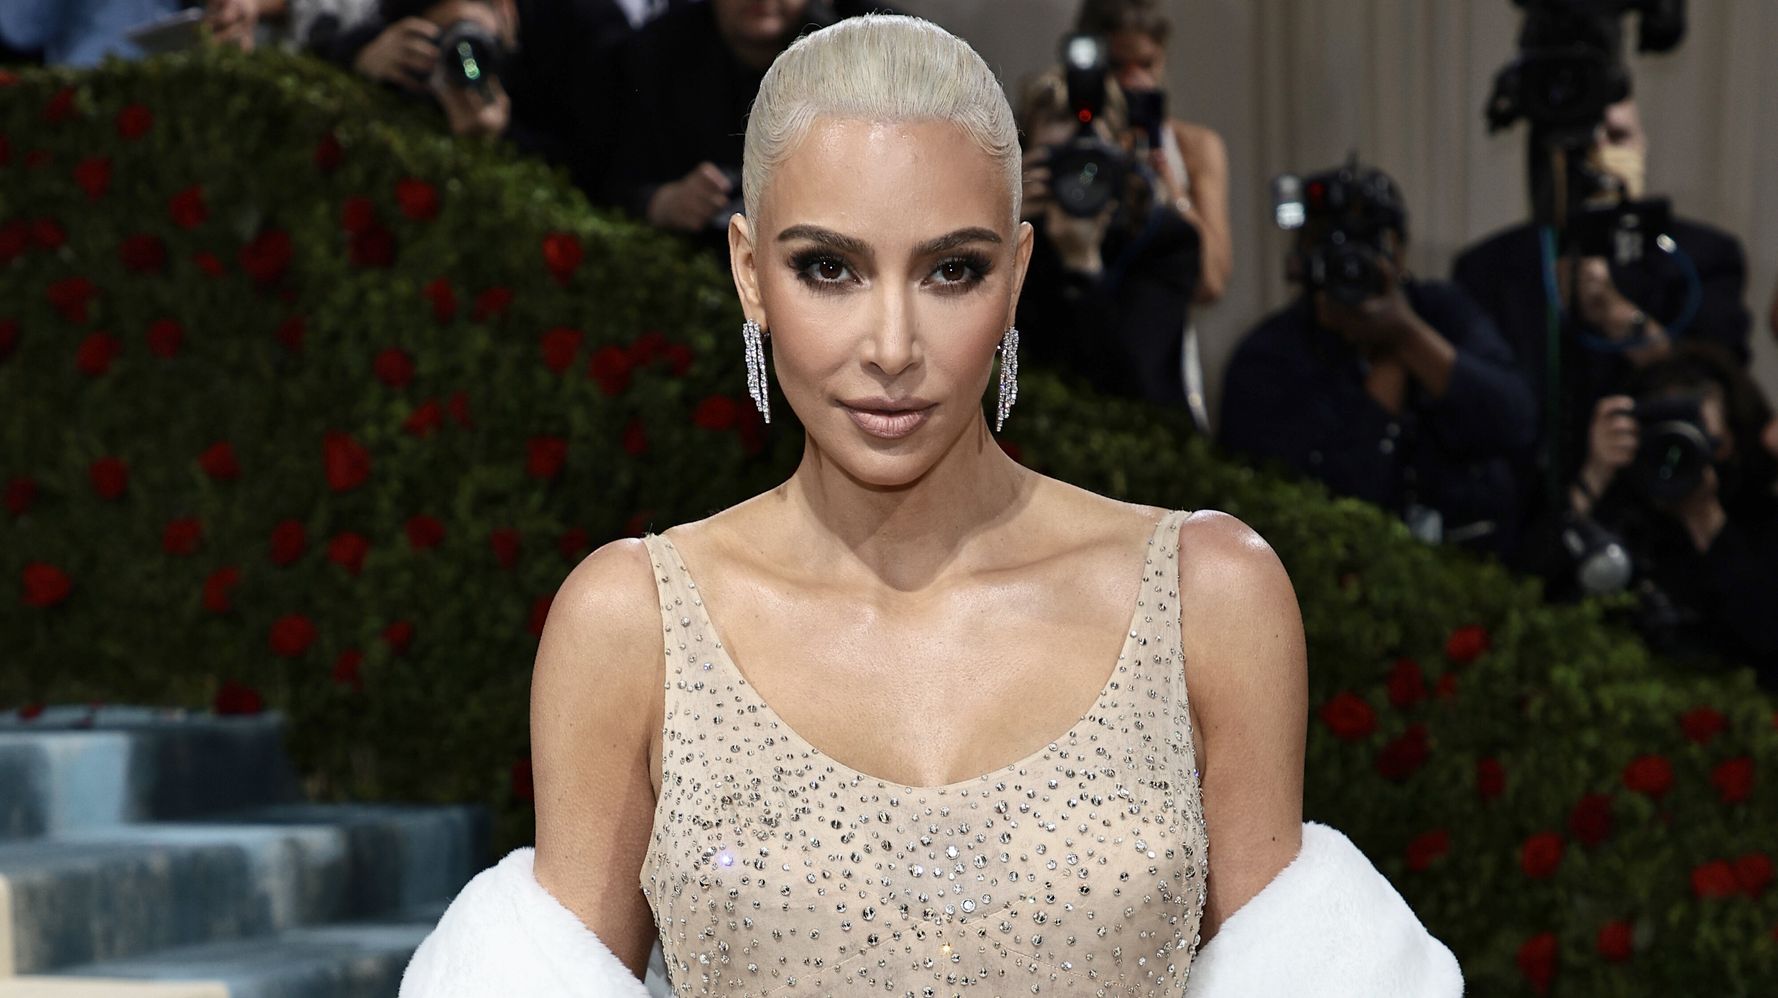 Kim Kardashian Reportedly Damaged Marilyn Monroe’s Iconic Dress